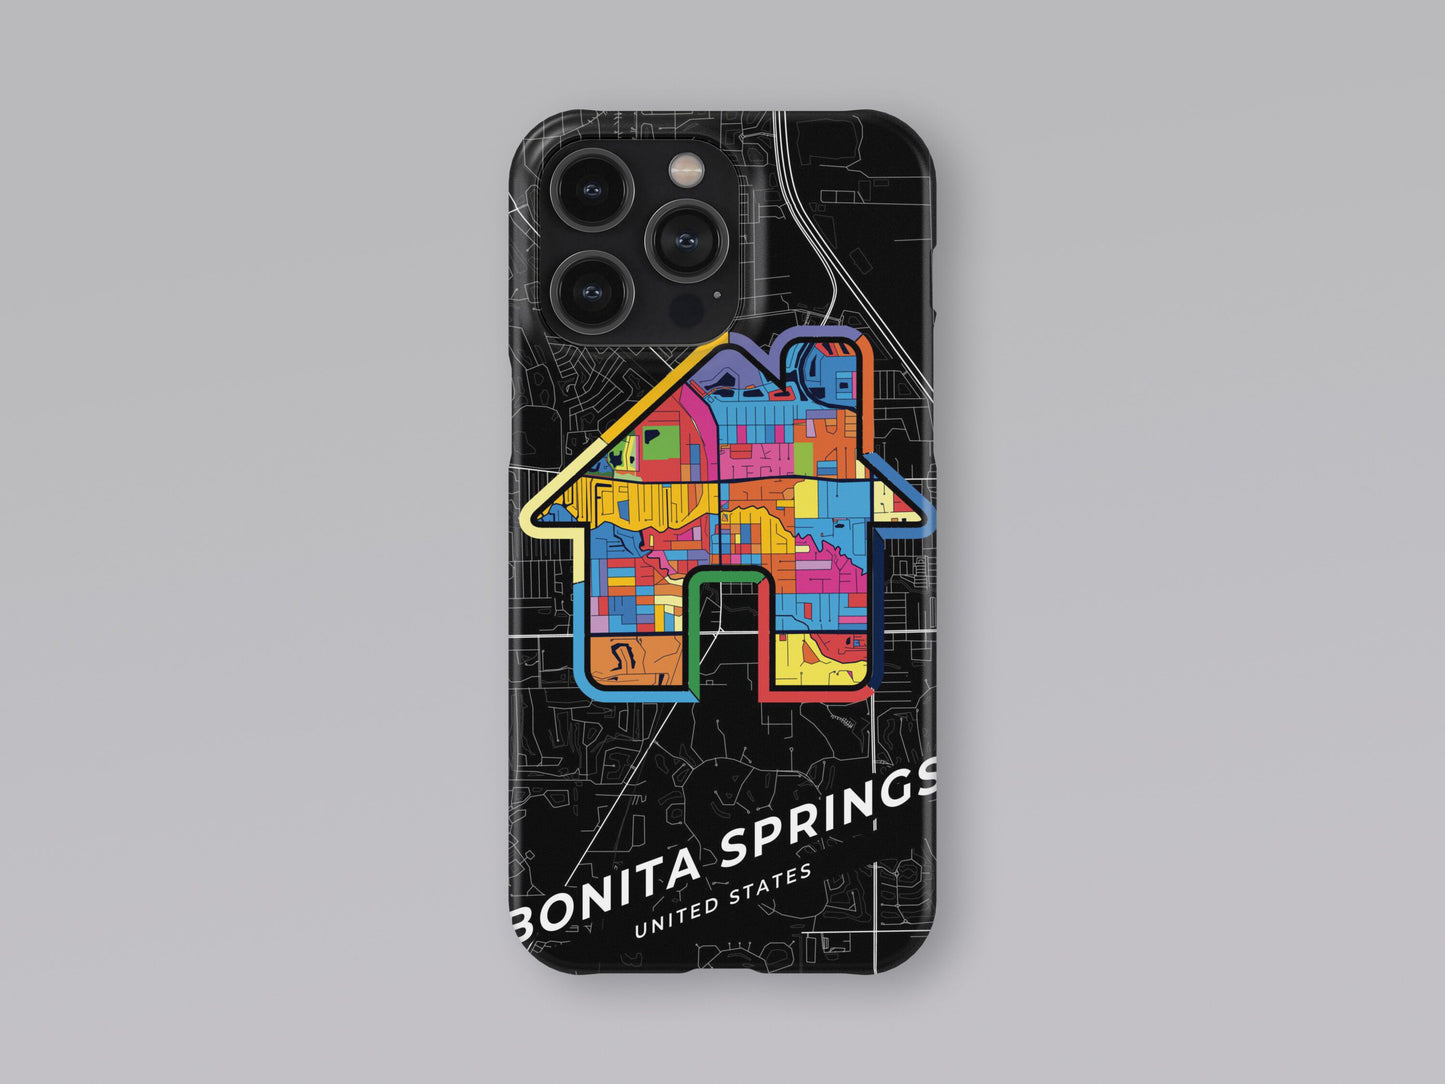 Bonita Springs Florida slim phone case with colorful icon. Birthday, wedding or housewarming gift. Couple match cases. 3